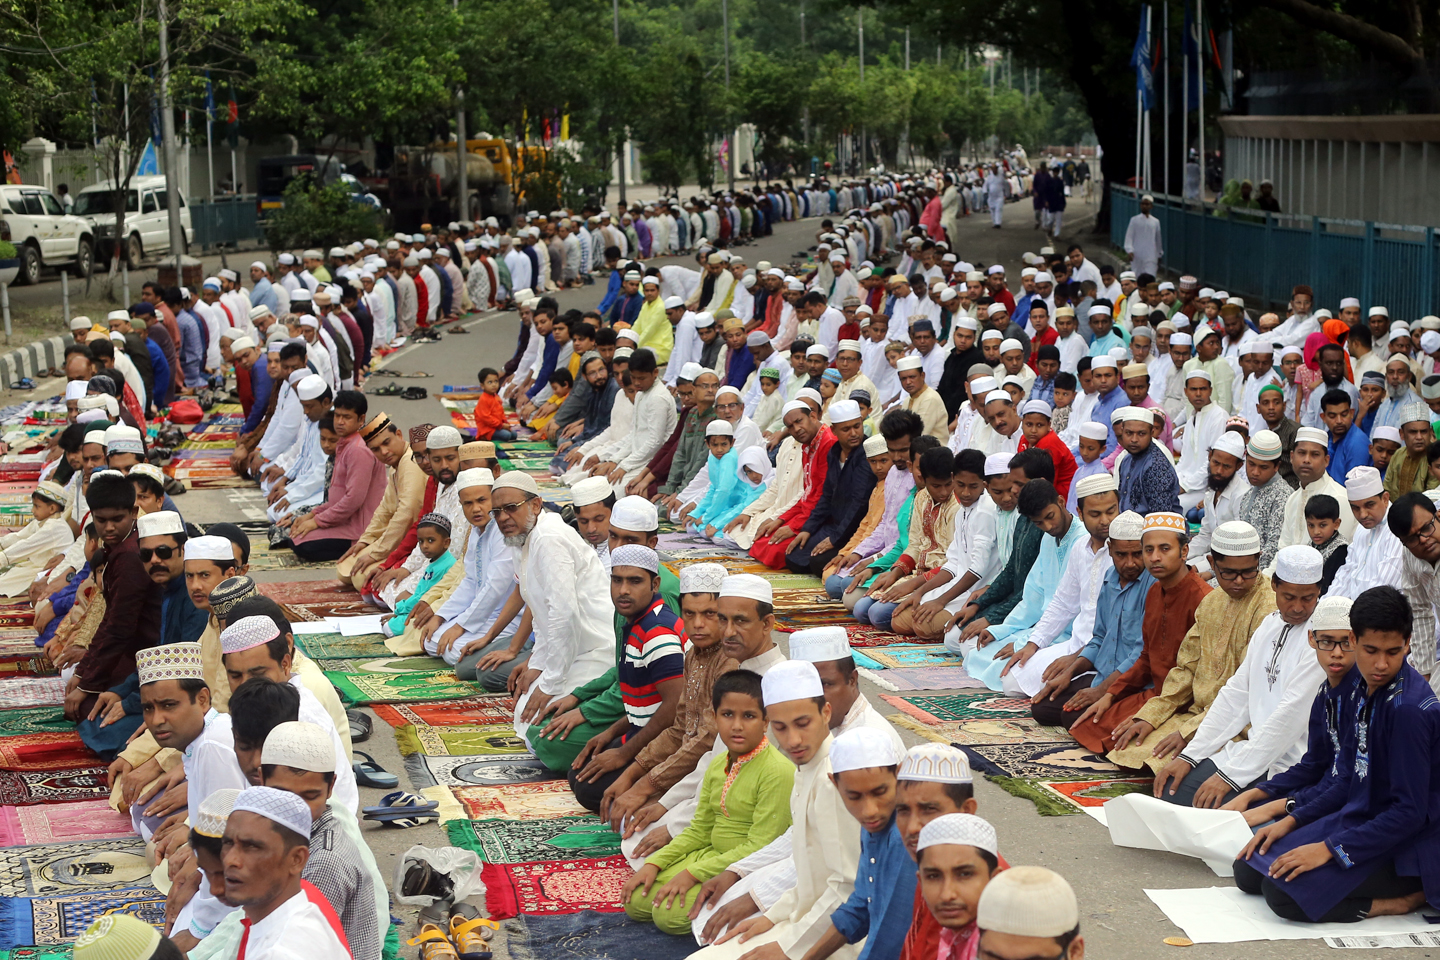 web-dhaka-bangladesh-religion-islam-c2a9-sony-ramany-nurphoto.jpg